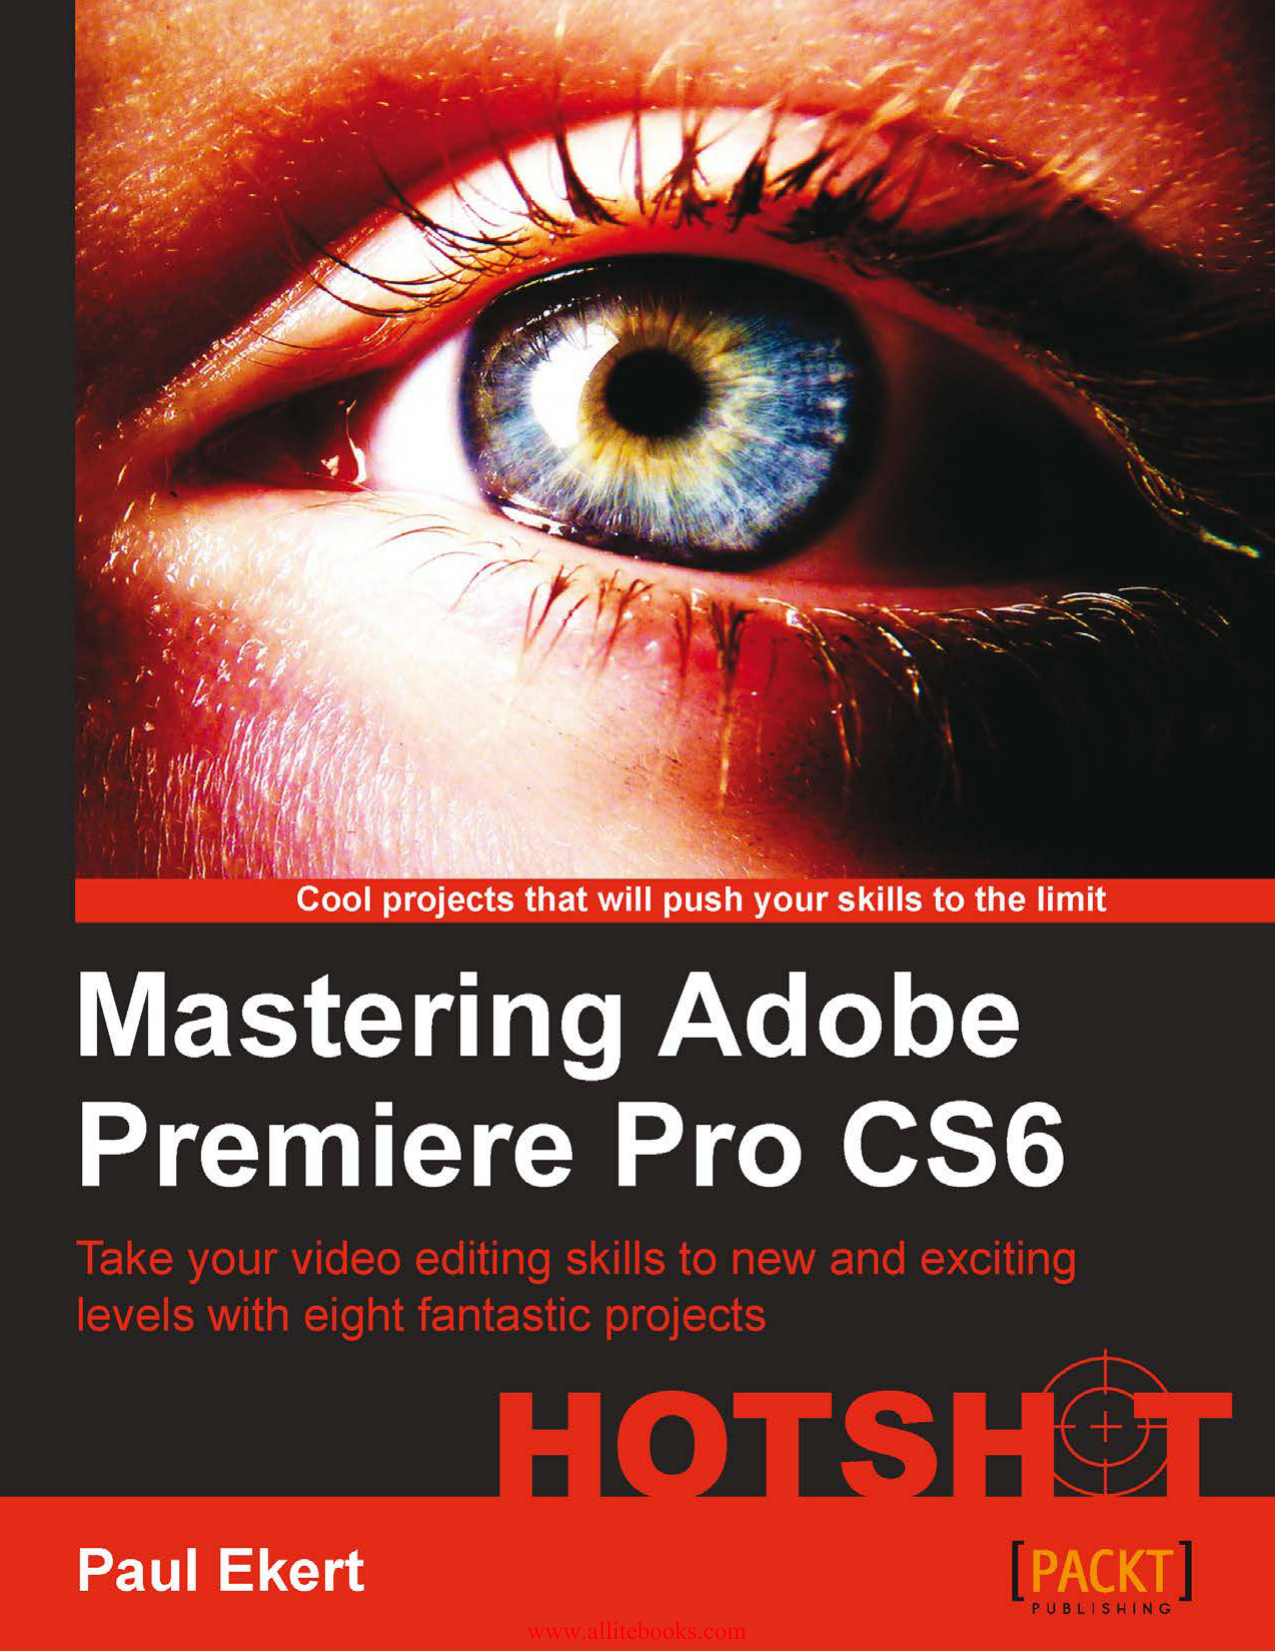 adobe premiere pro cs6 trial version free download